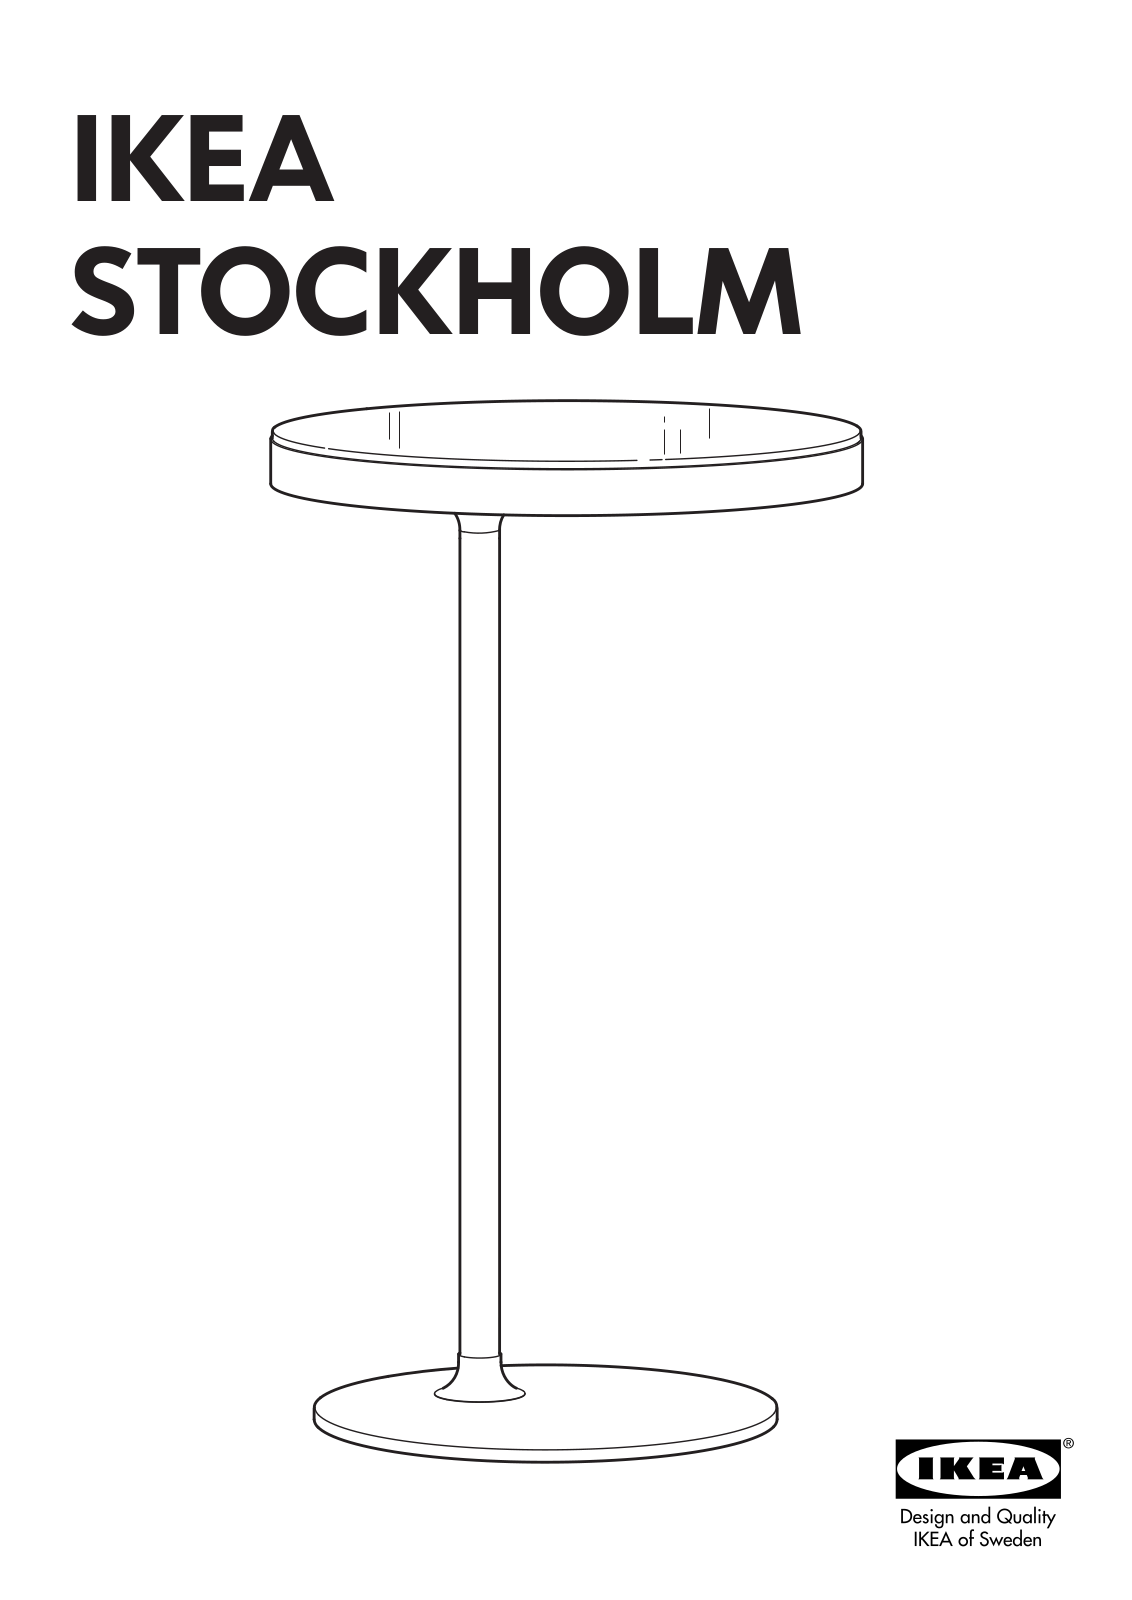 IKEA STOCKHOLM SIDE TABLE 14 Assembly Instruction